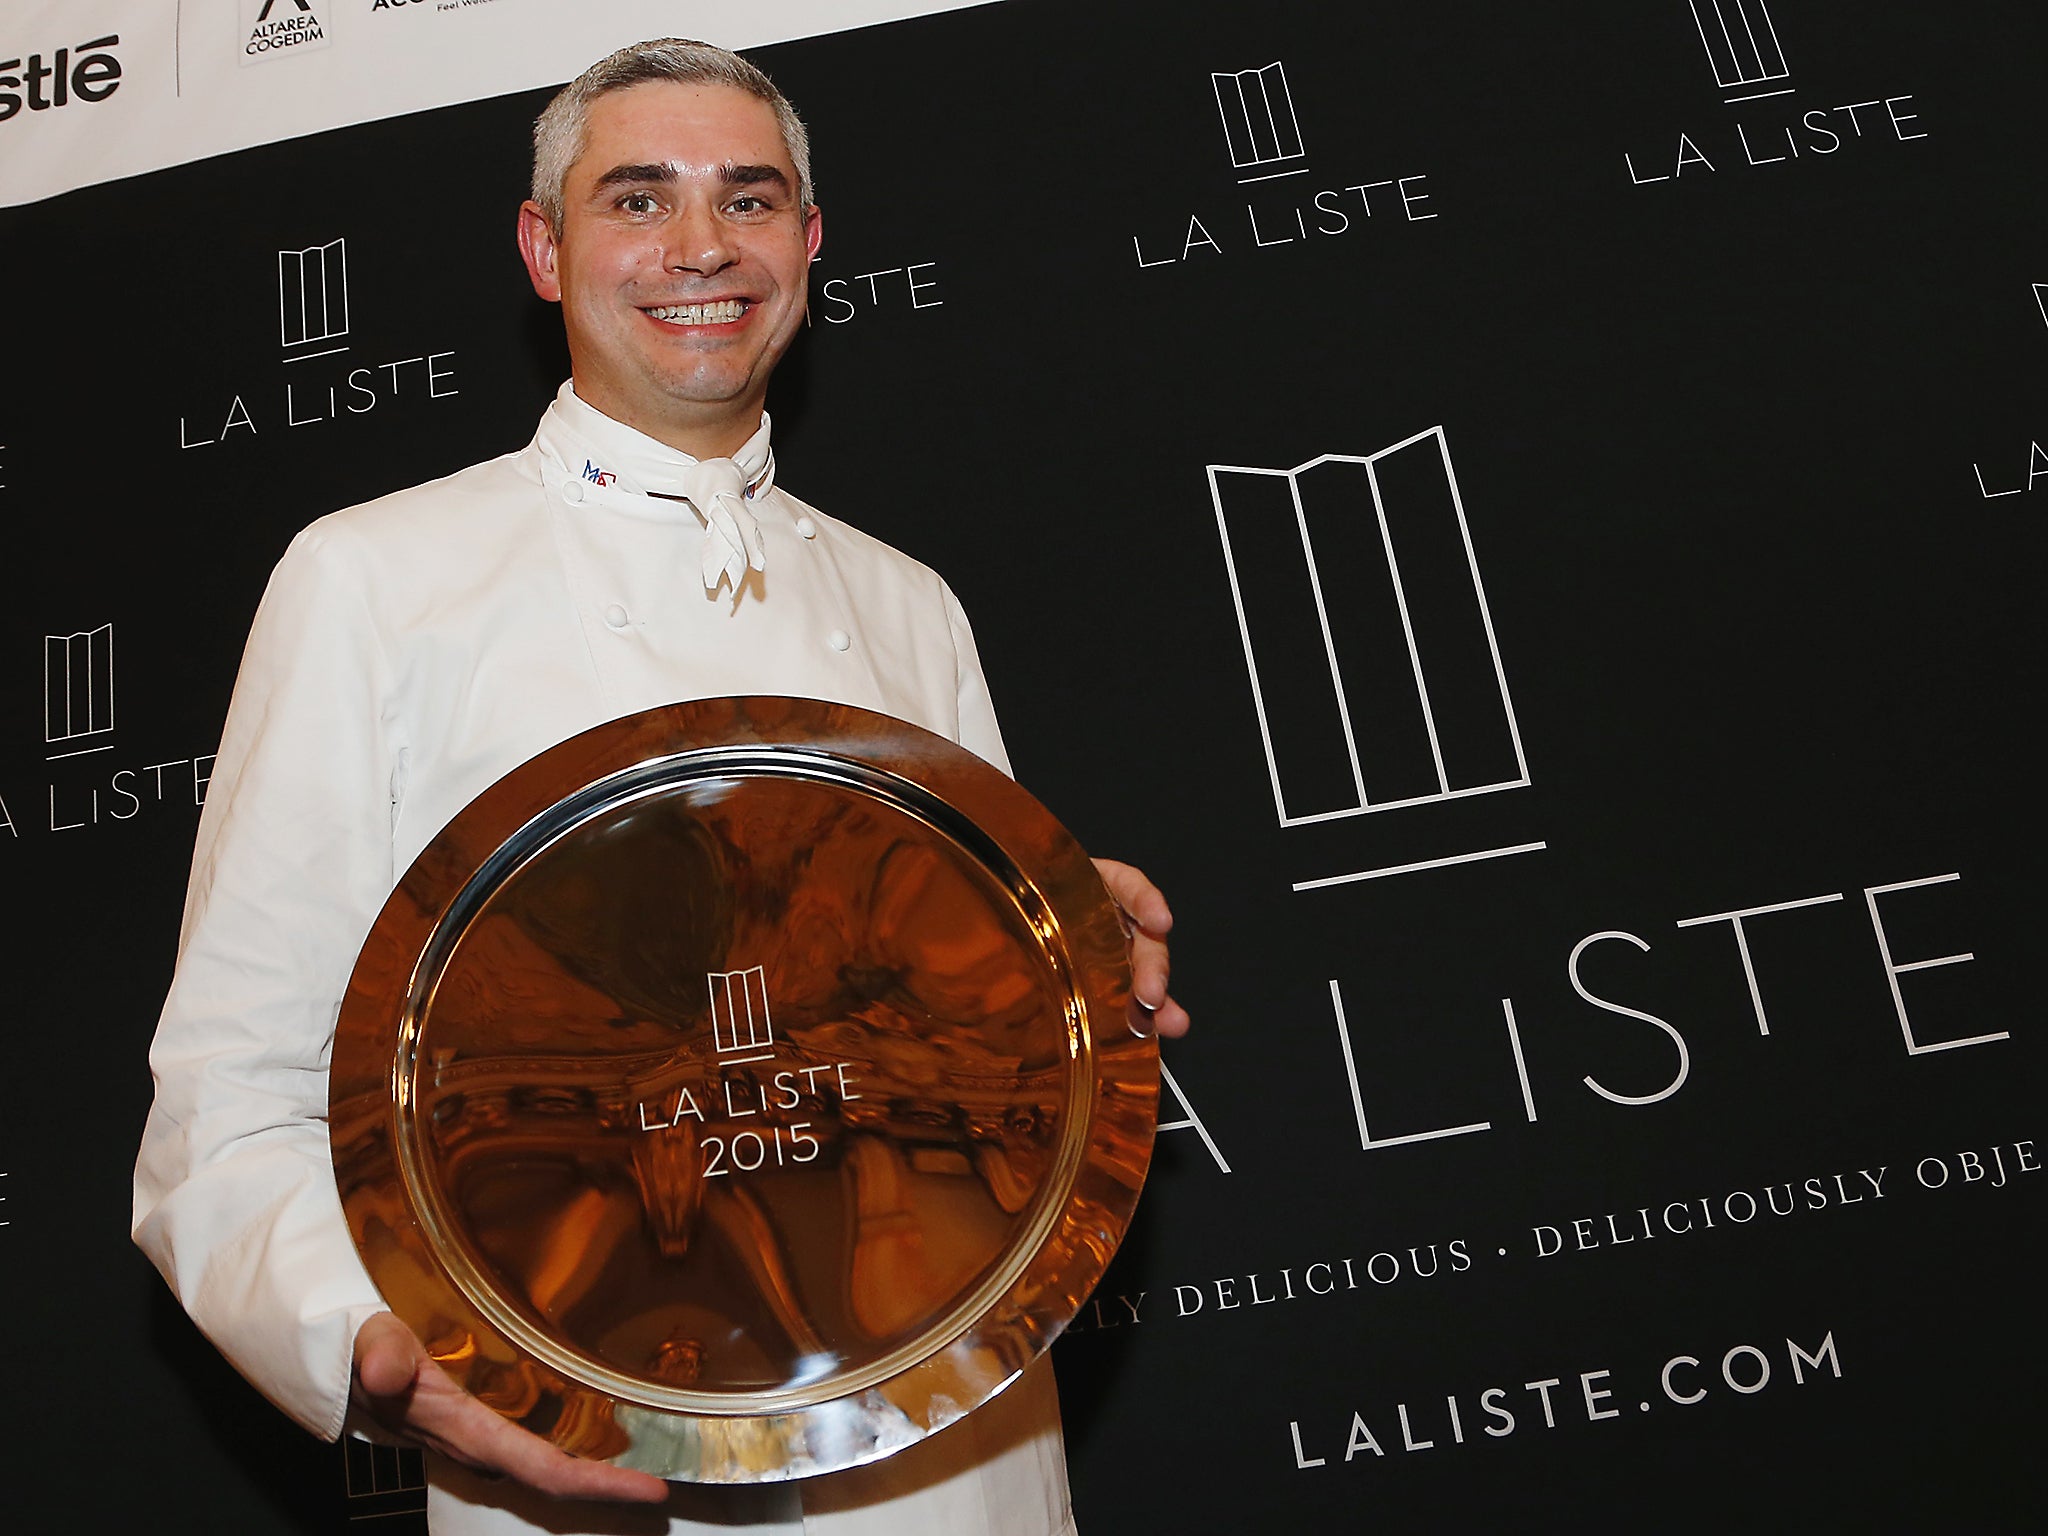 Award-winning chef Benoît Violier, who killed himself last year